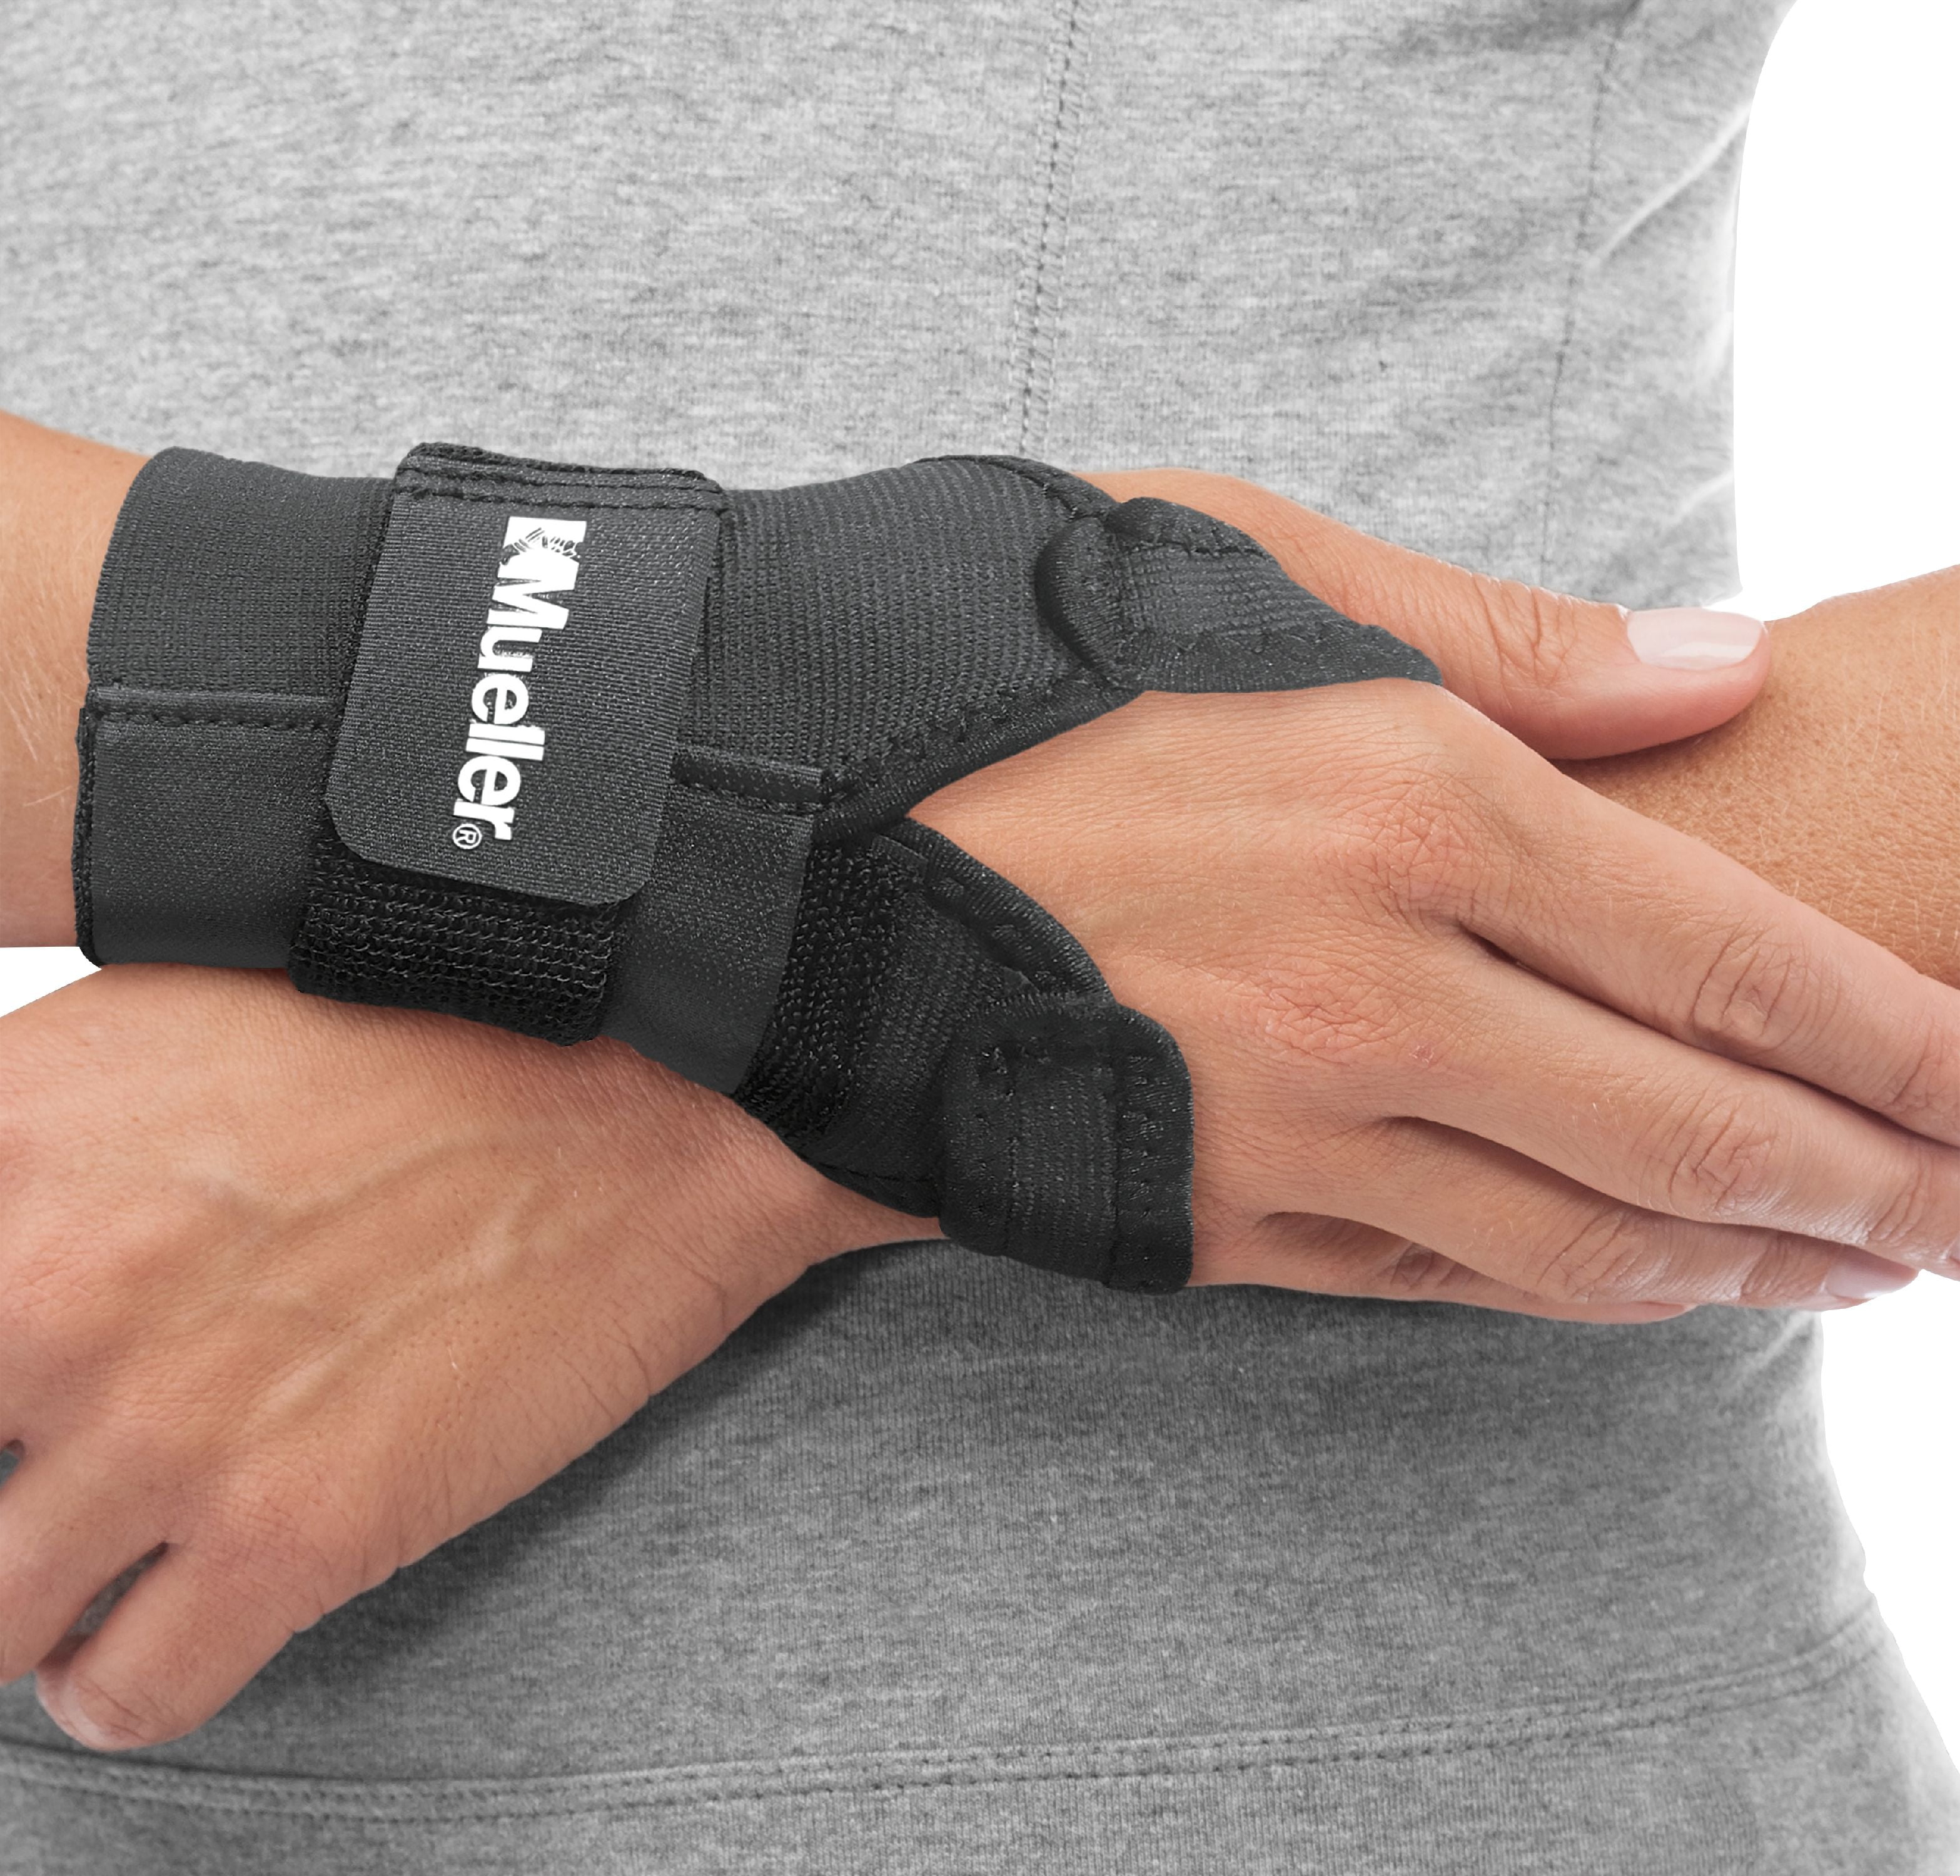 Sporting Wrist Brace splint support relieve pain for all Sports 